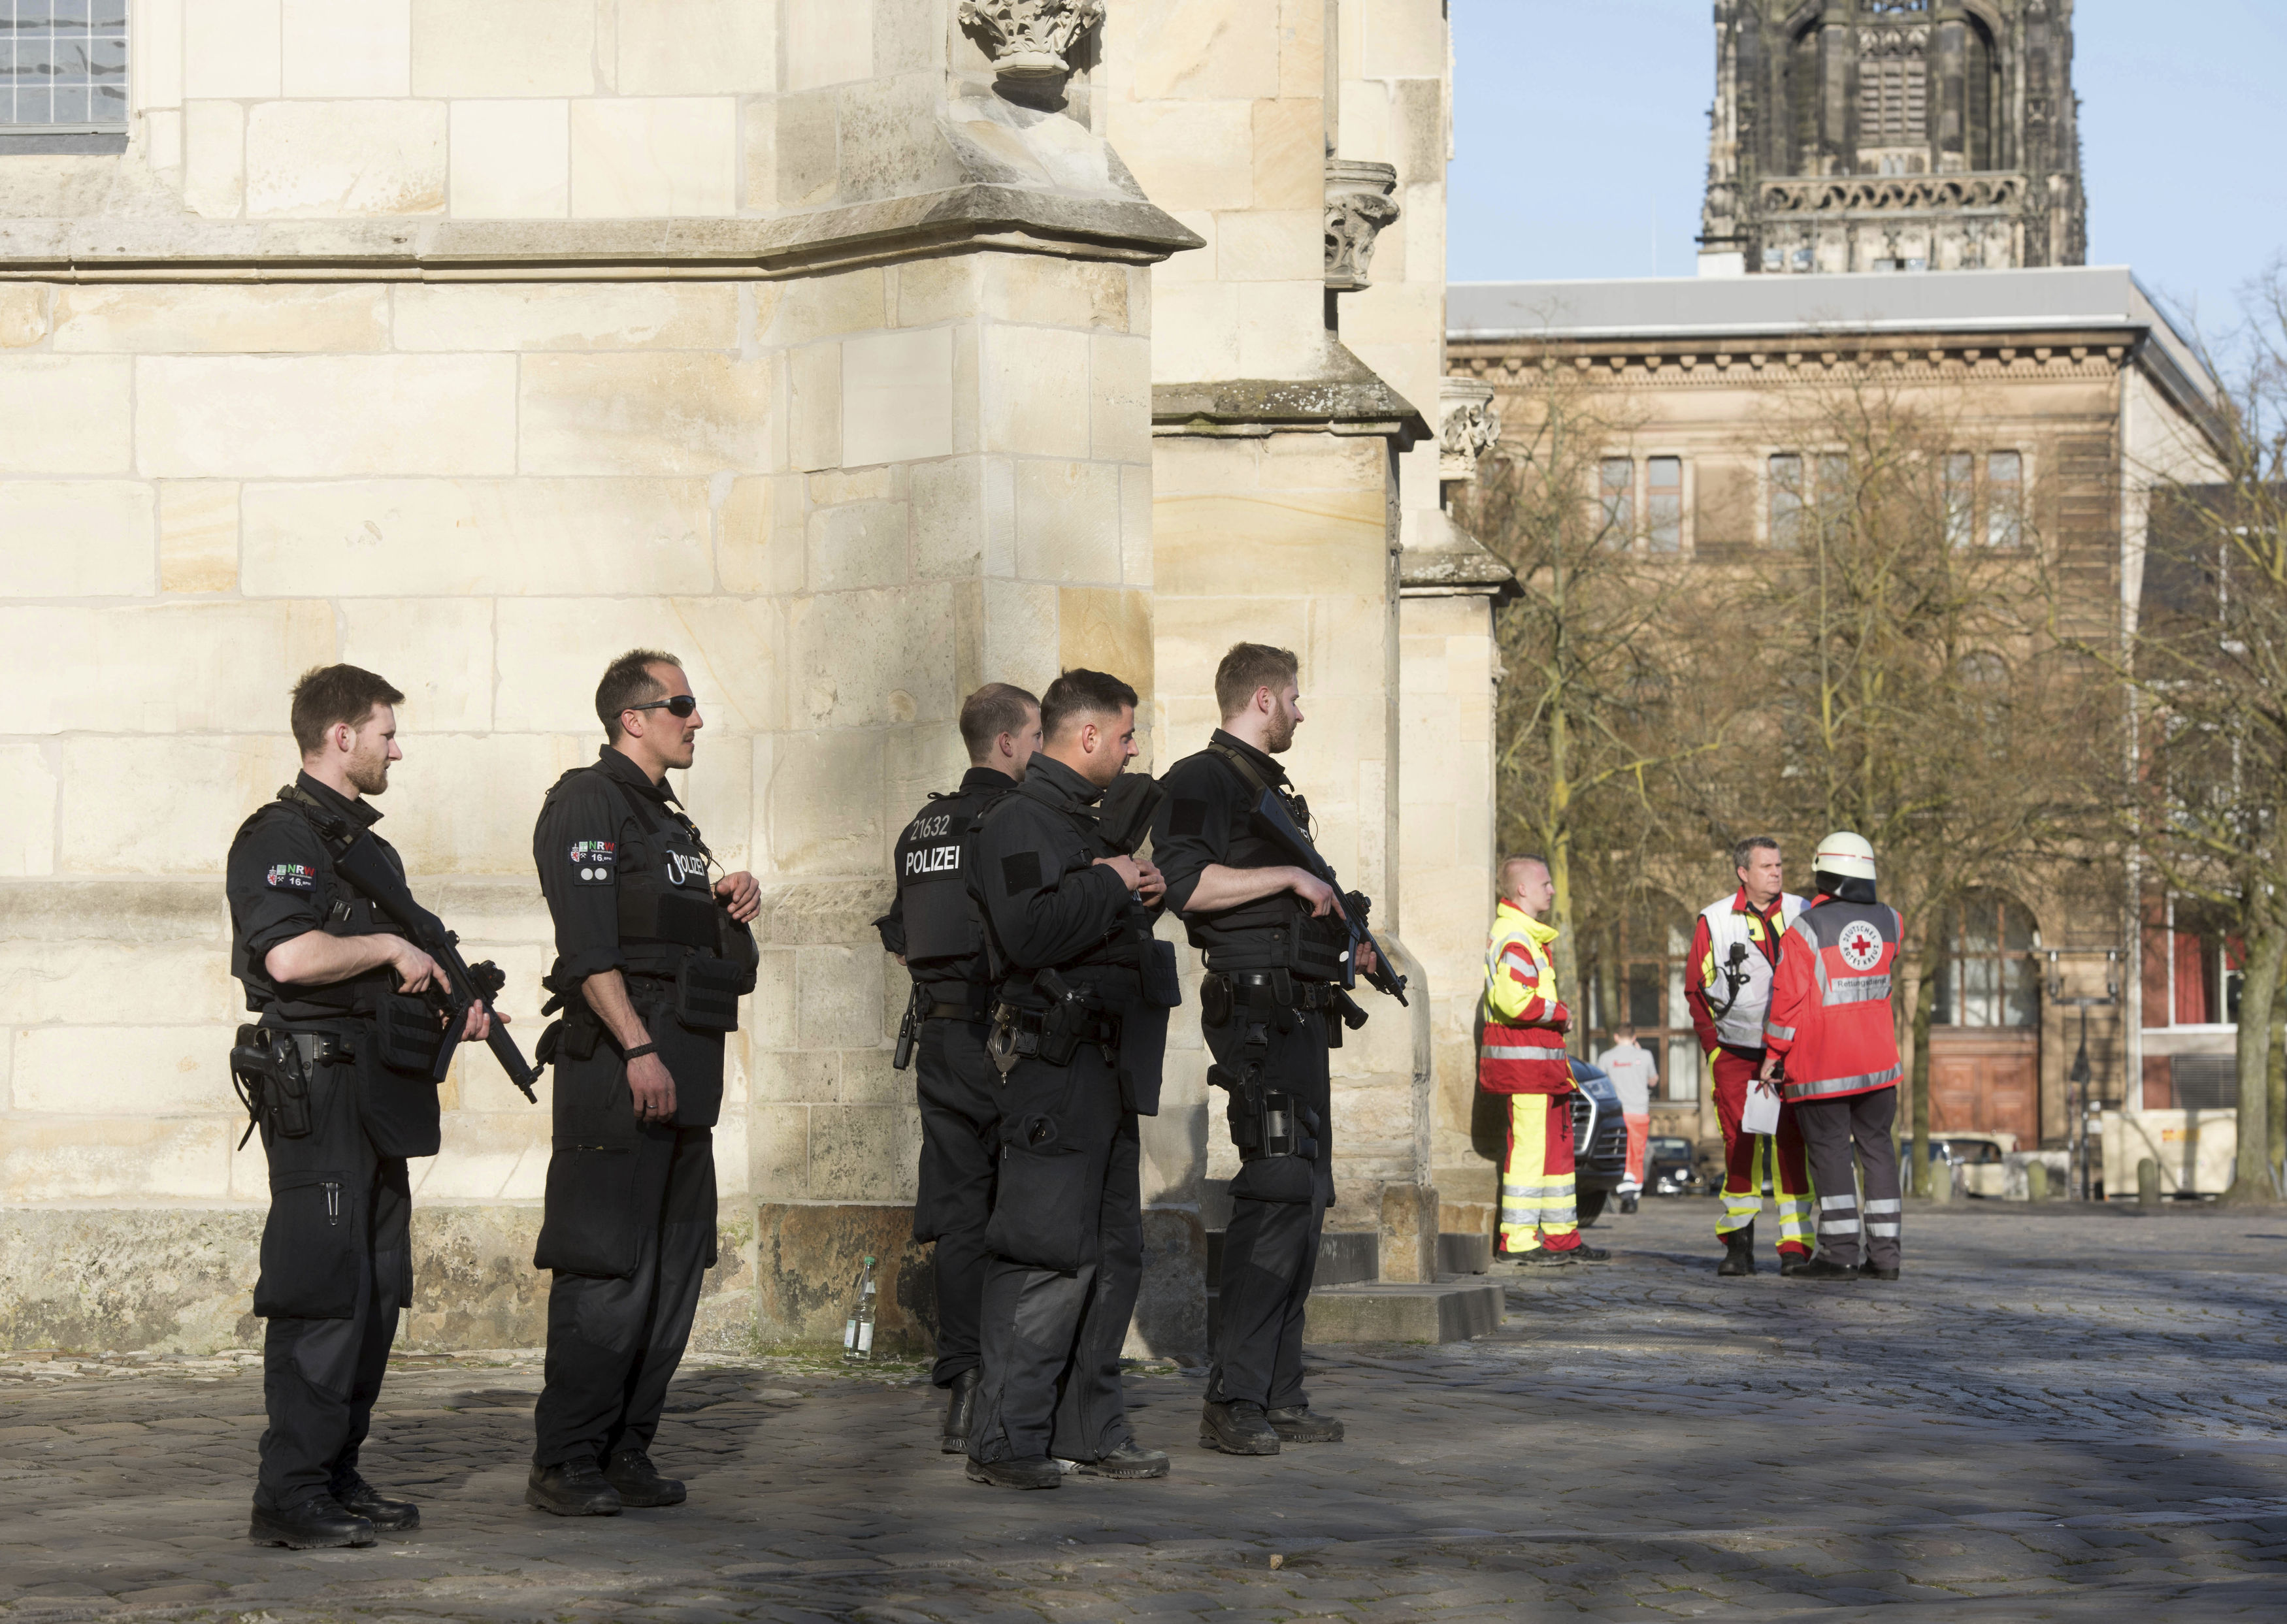 Police on patrol in Munster (Bernd Thissen/dpa via AP)